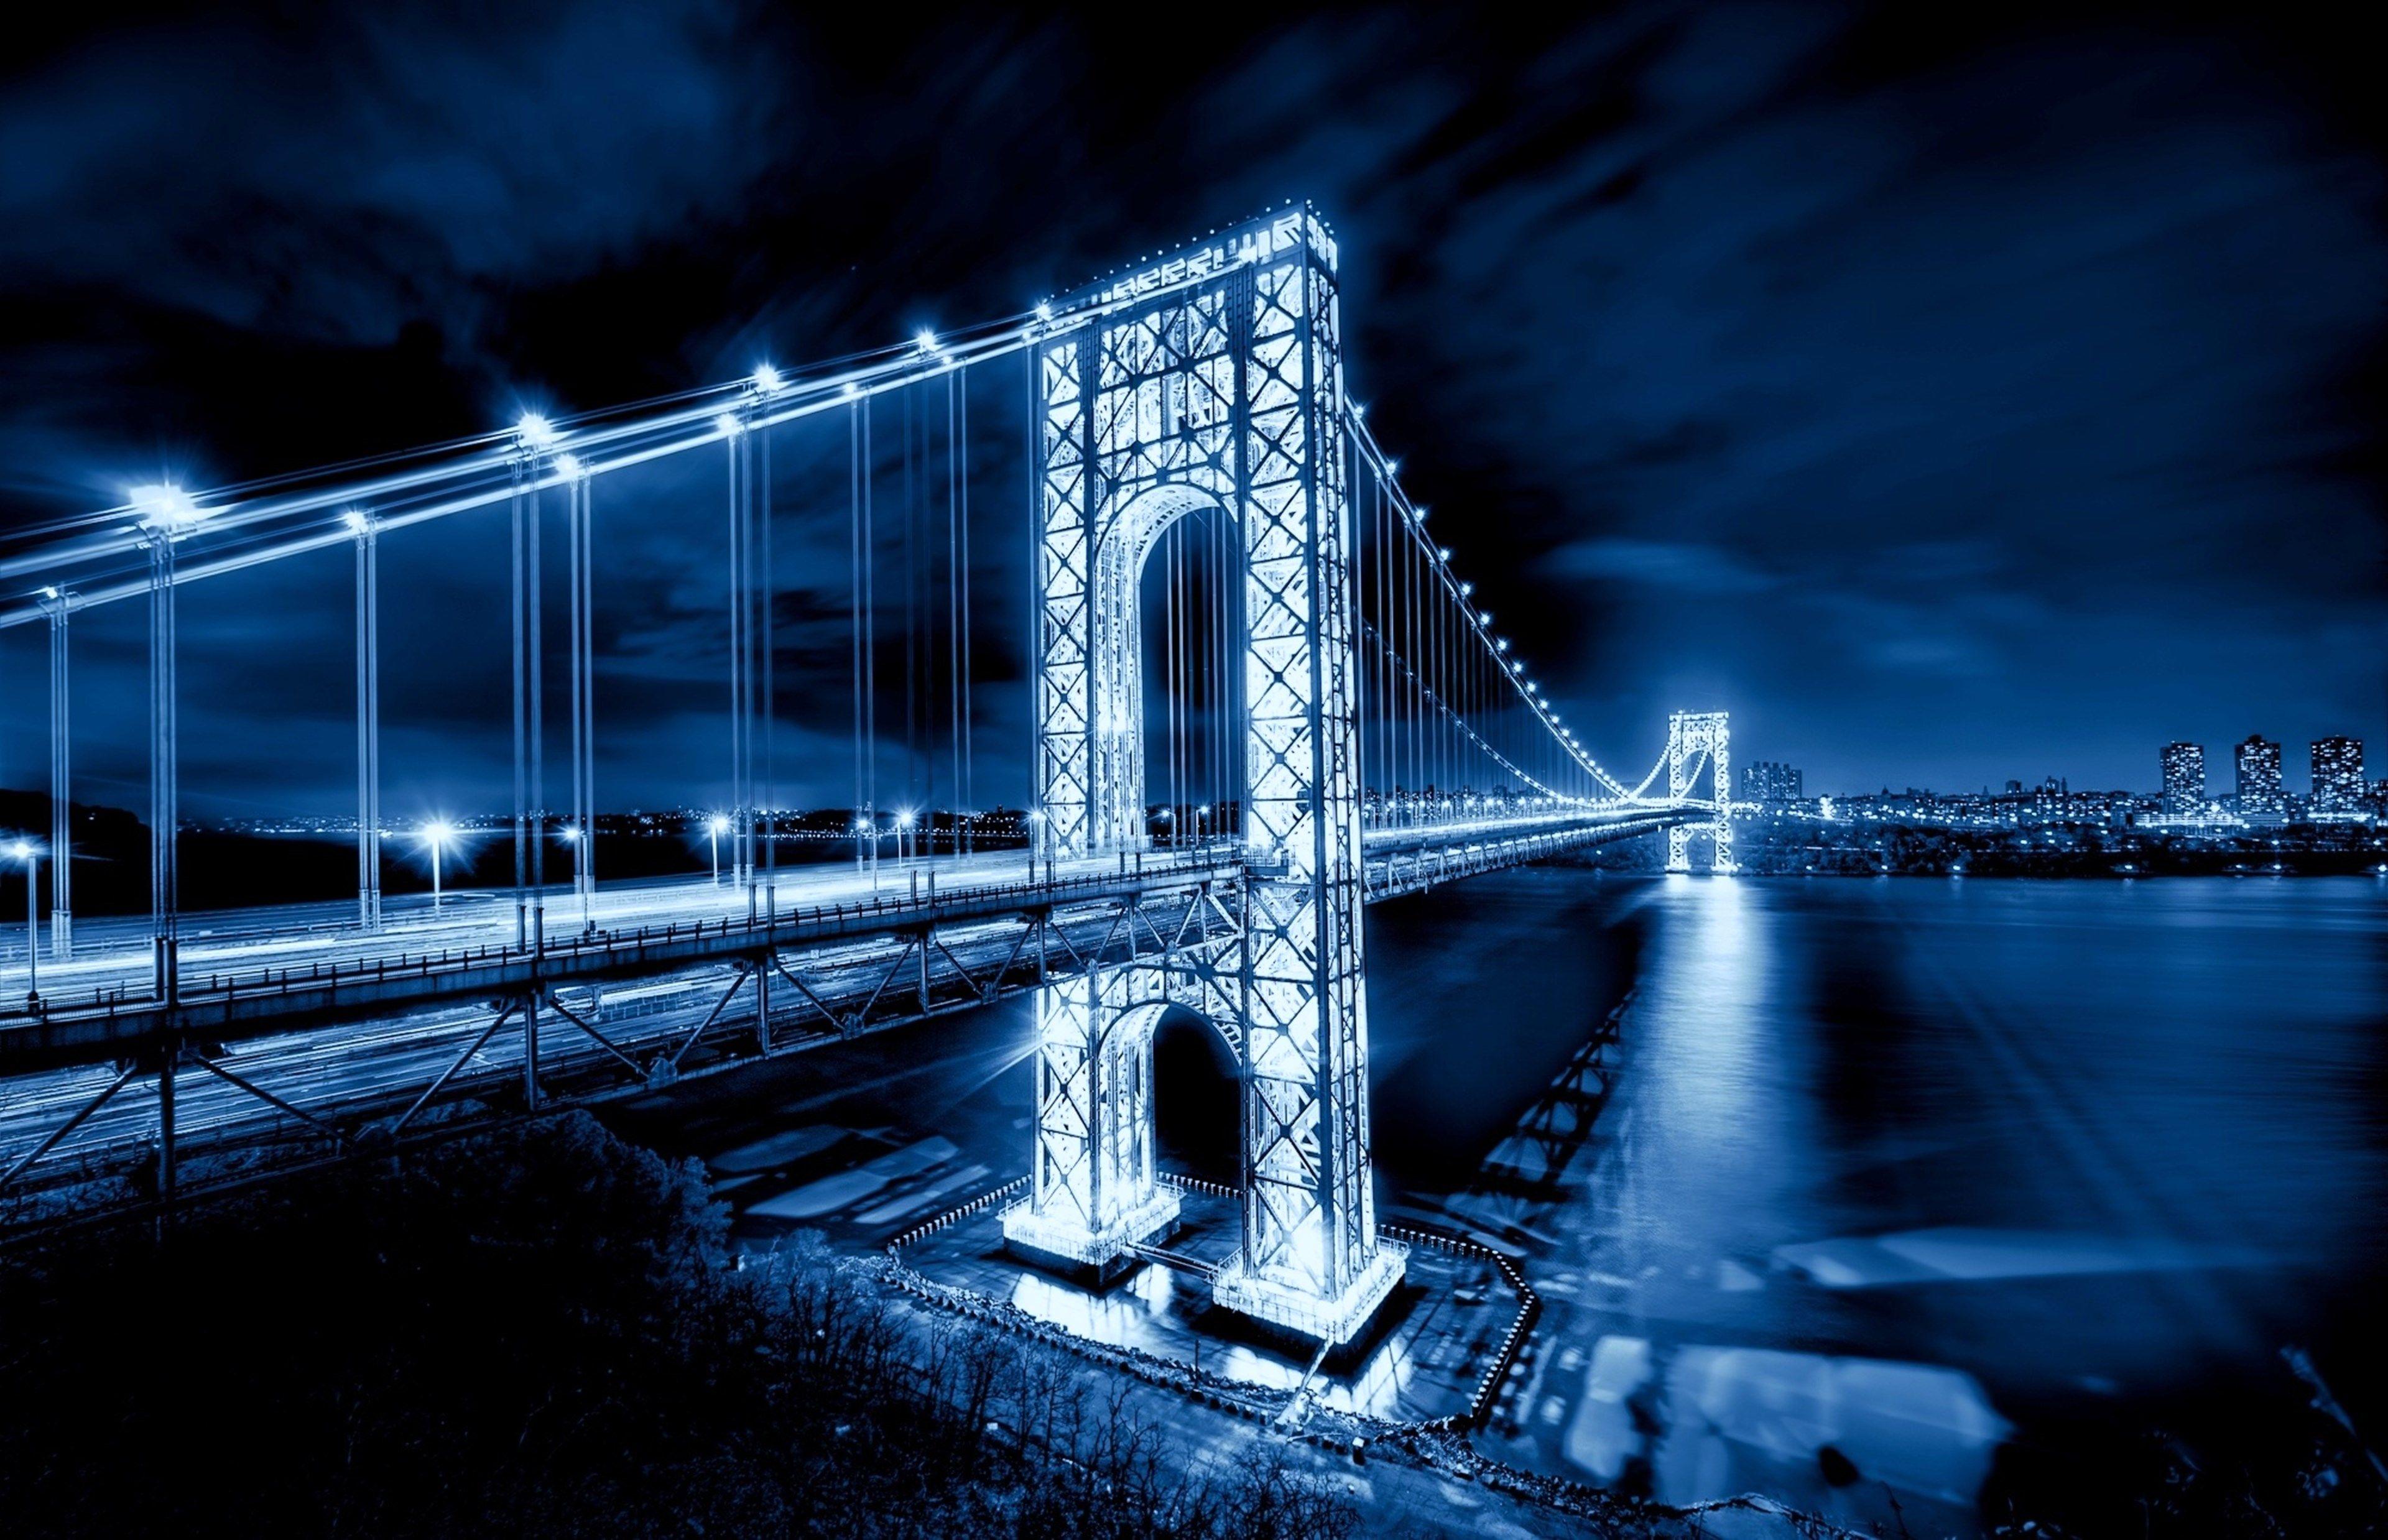 george washington bridge image for background desktop free, 1153